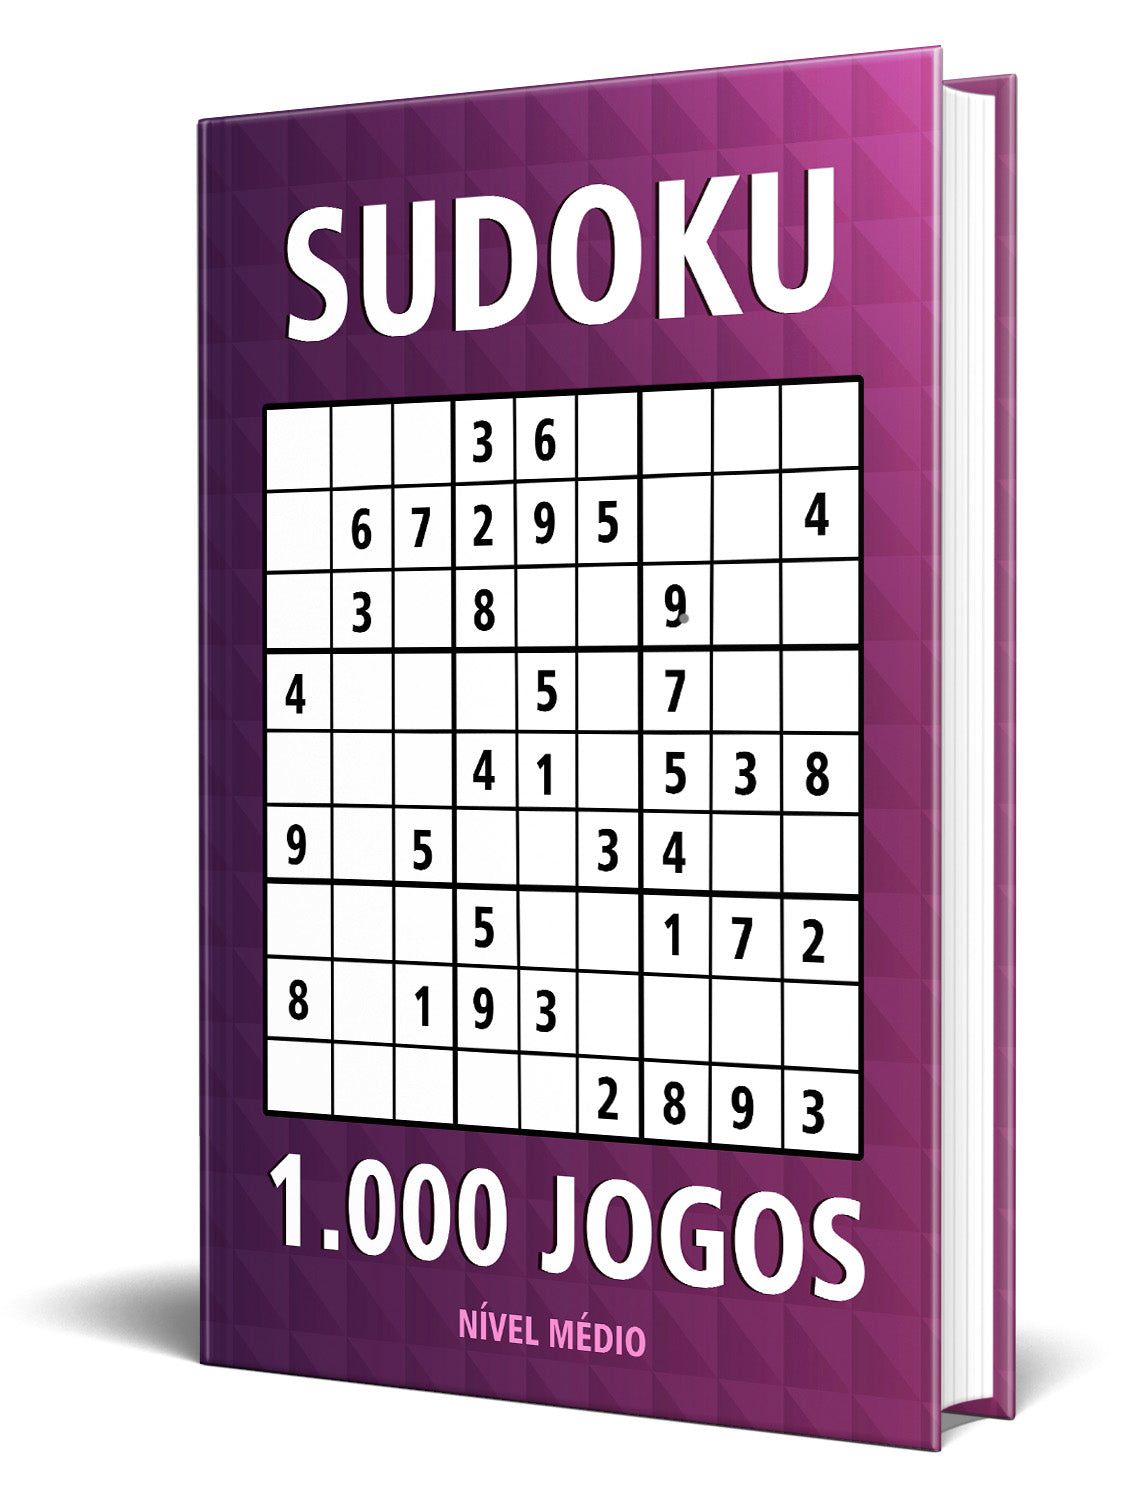 Sudoku Clássico 9x9 - Médio - Volume 3 - 276 Jogos